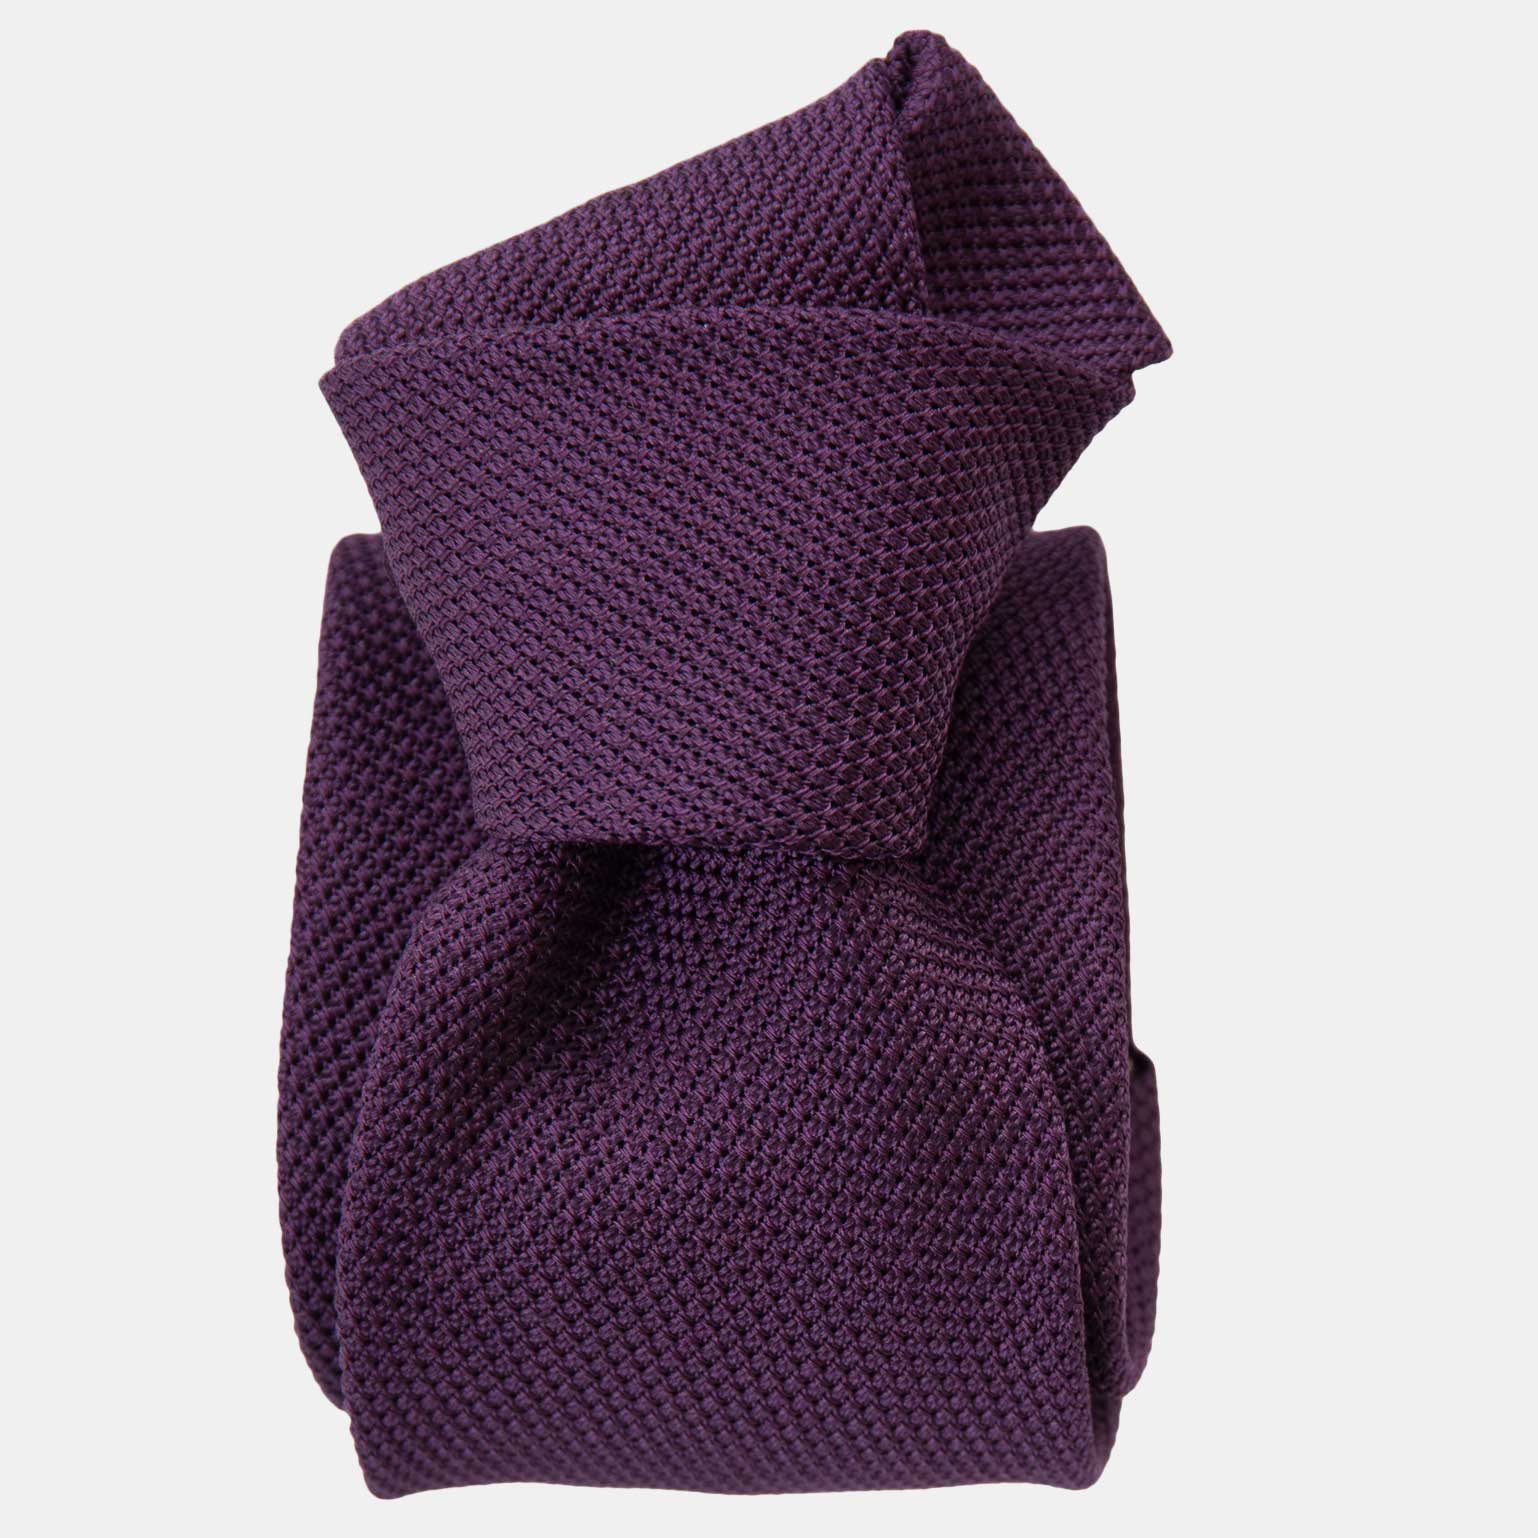 Purple Grenadine Tie - Garza Fina - Made in Italy